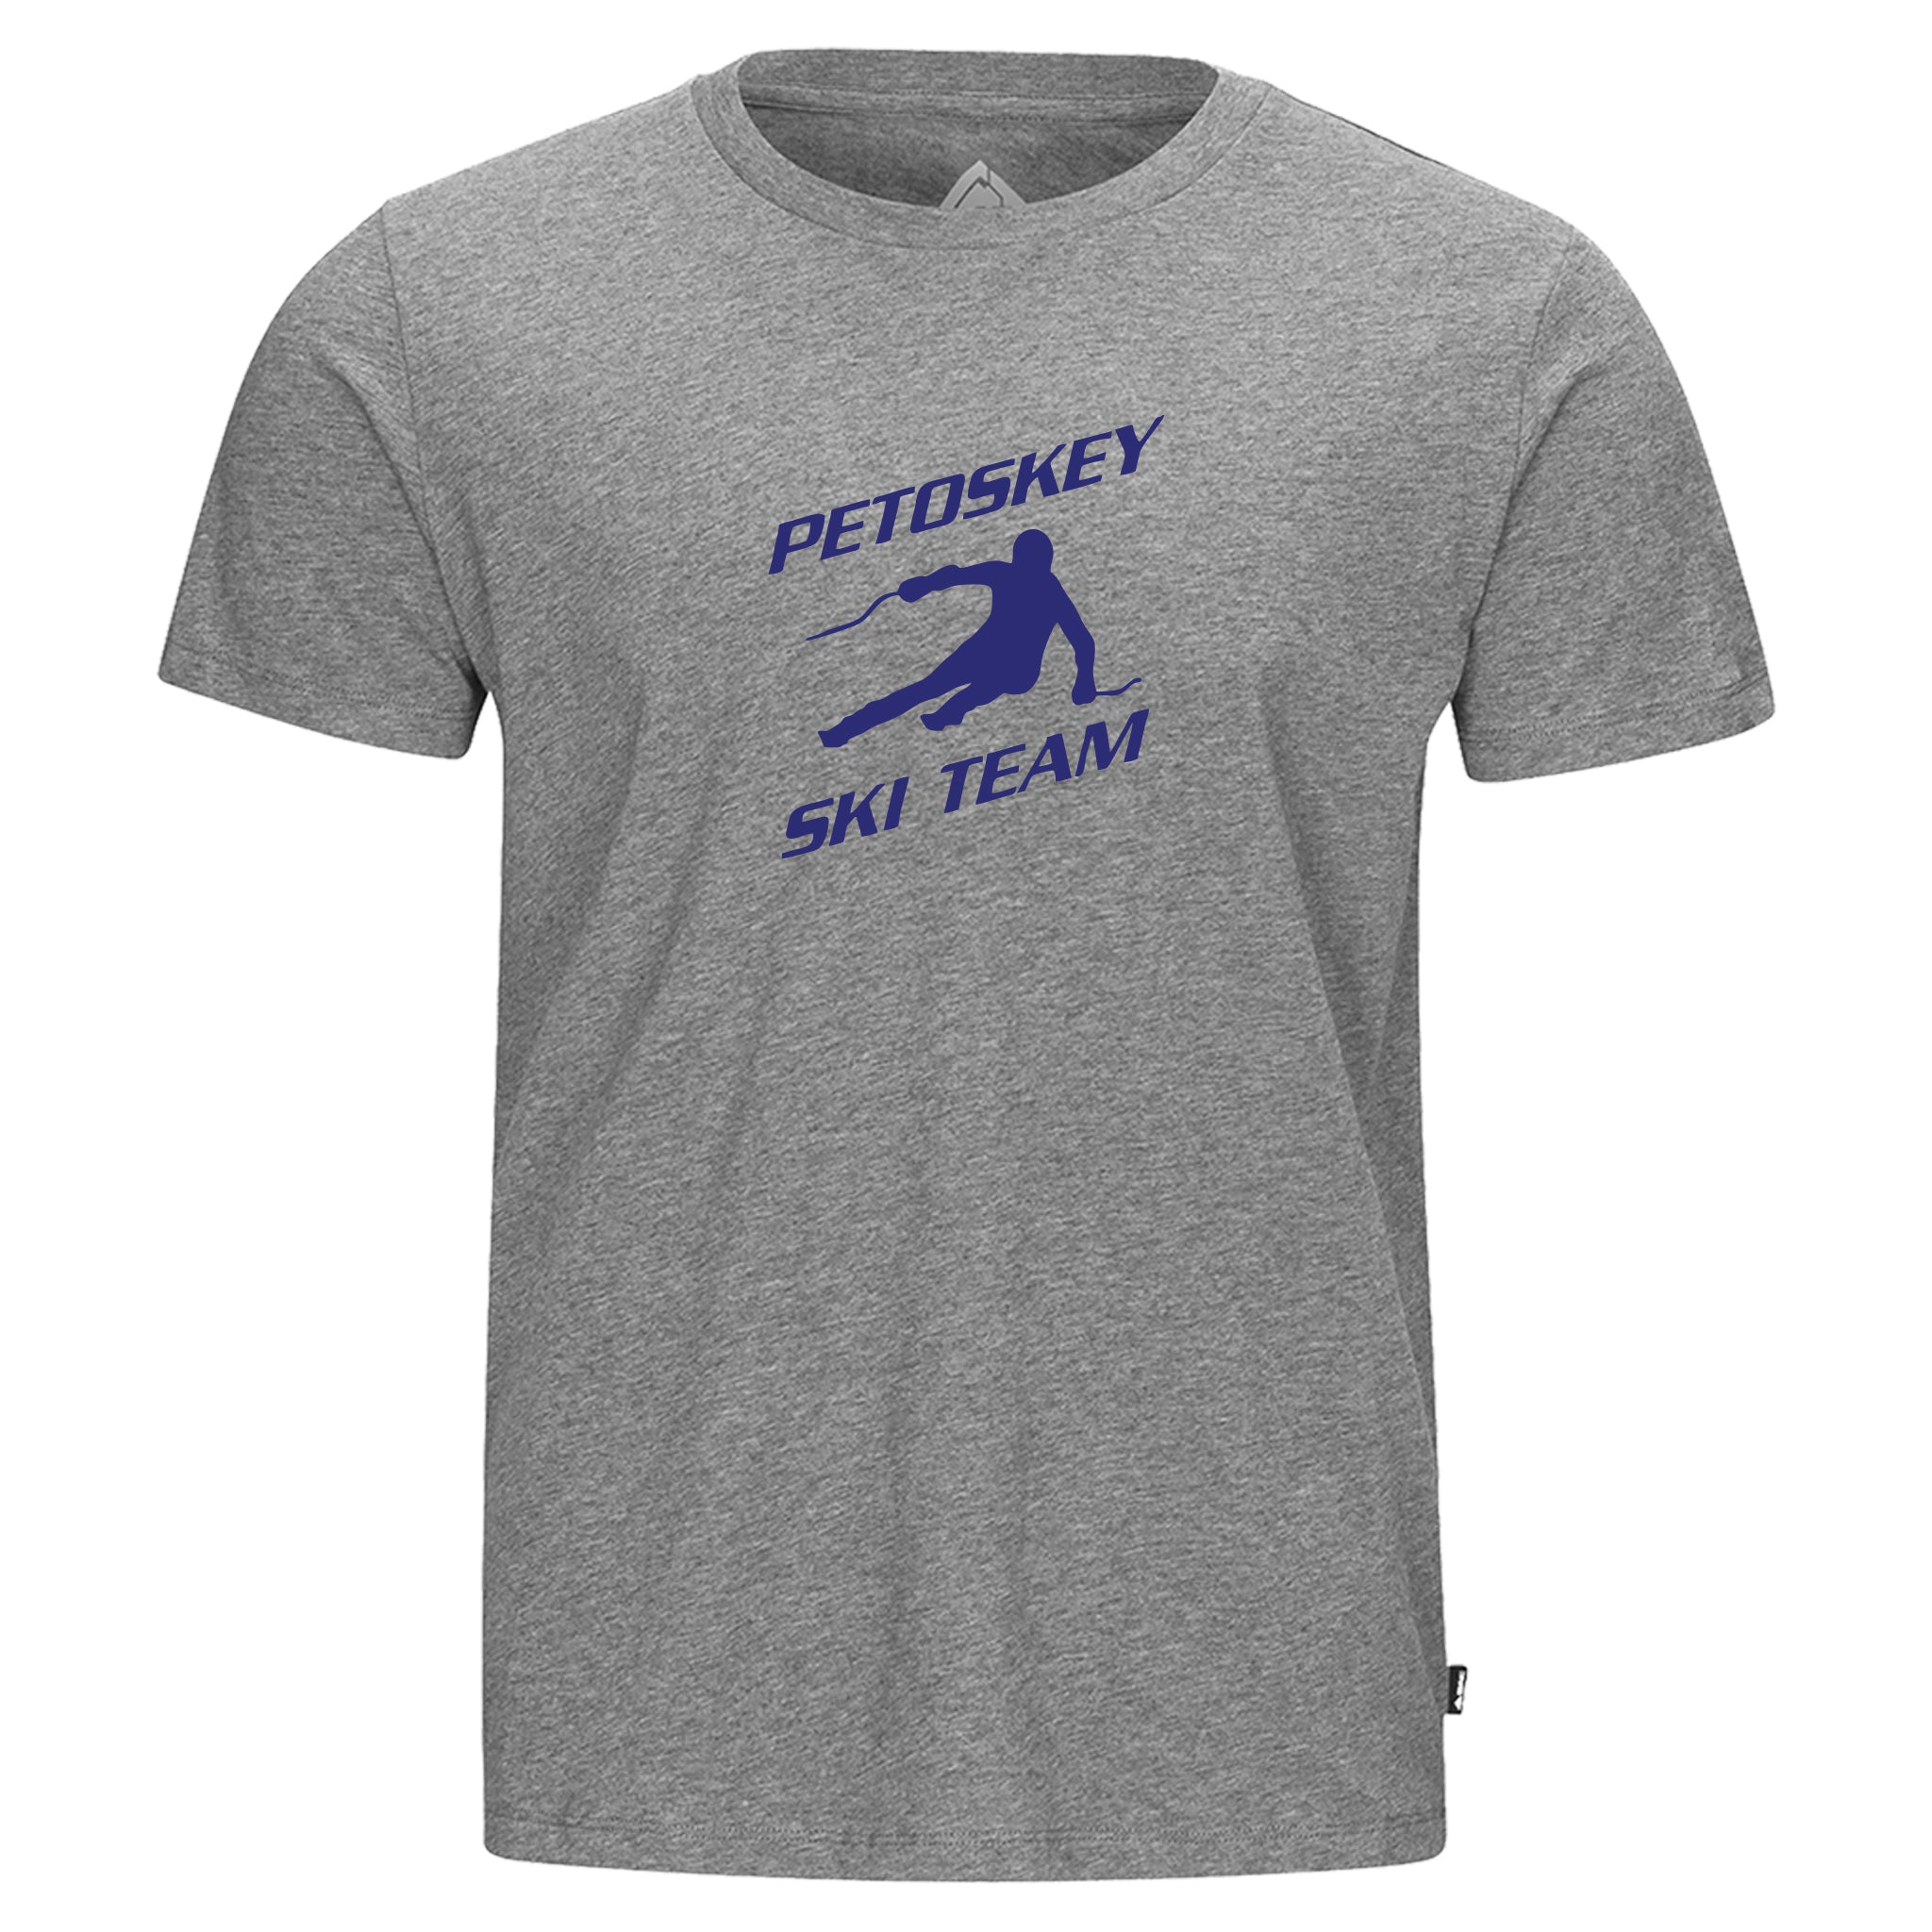 Cotton T-Shirt - Petoskey